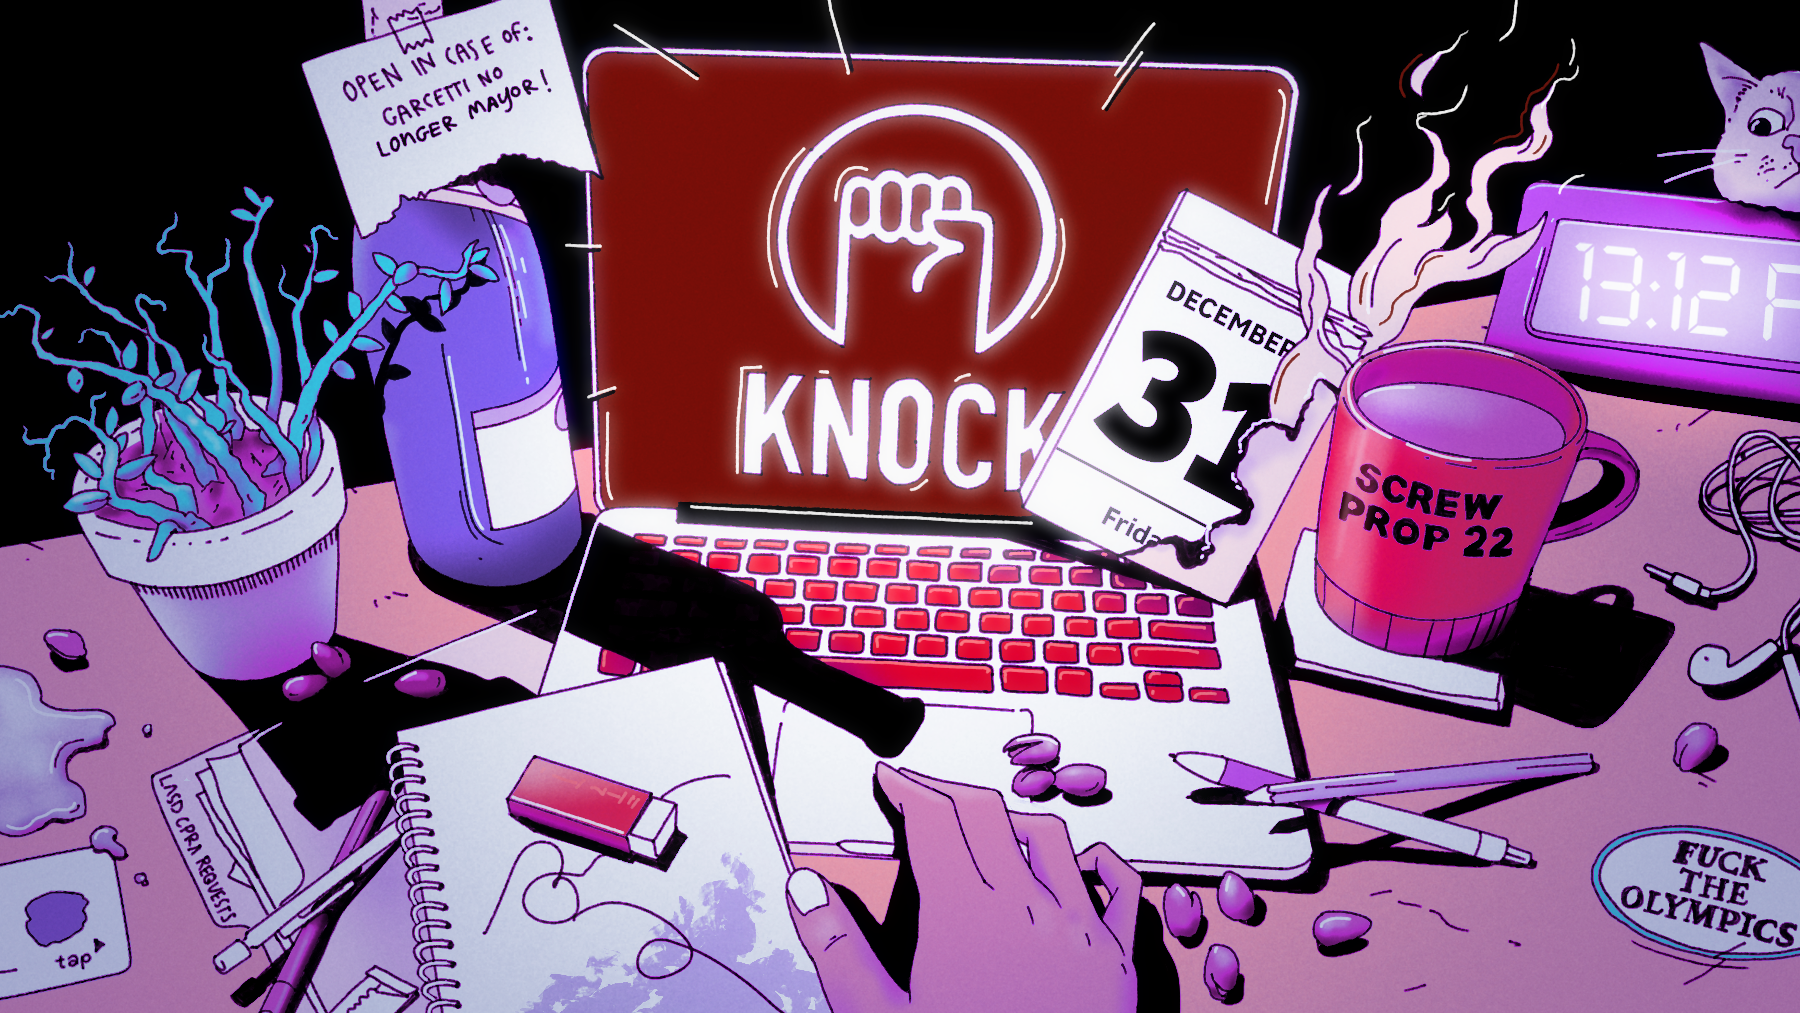 an illustration showing a knock la editor's desk